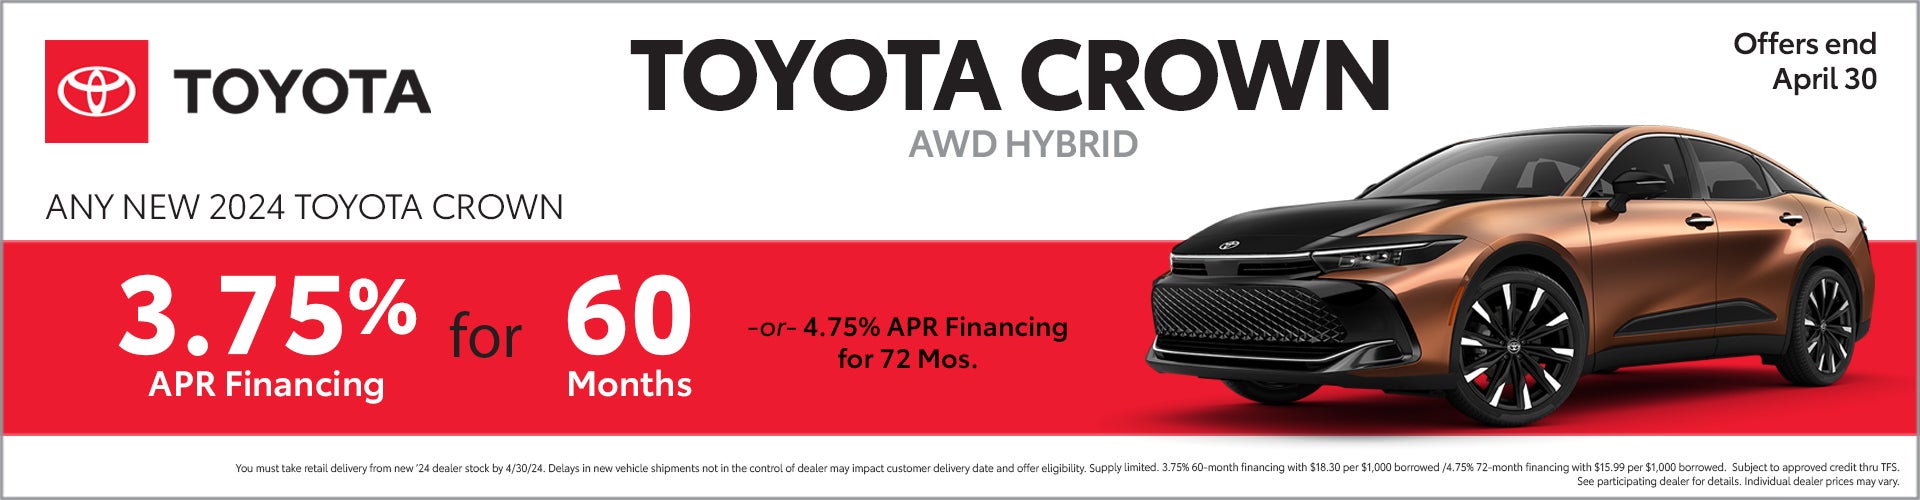 Toyota Crown Hybrid Offer 